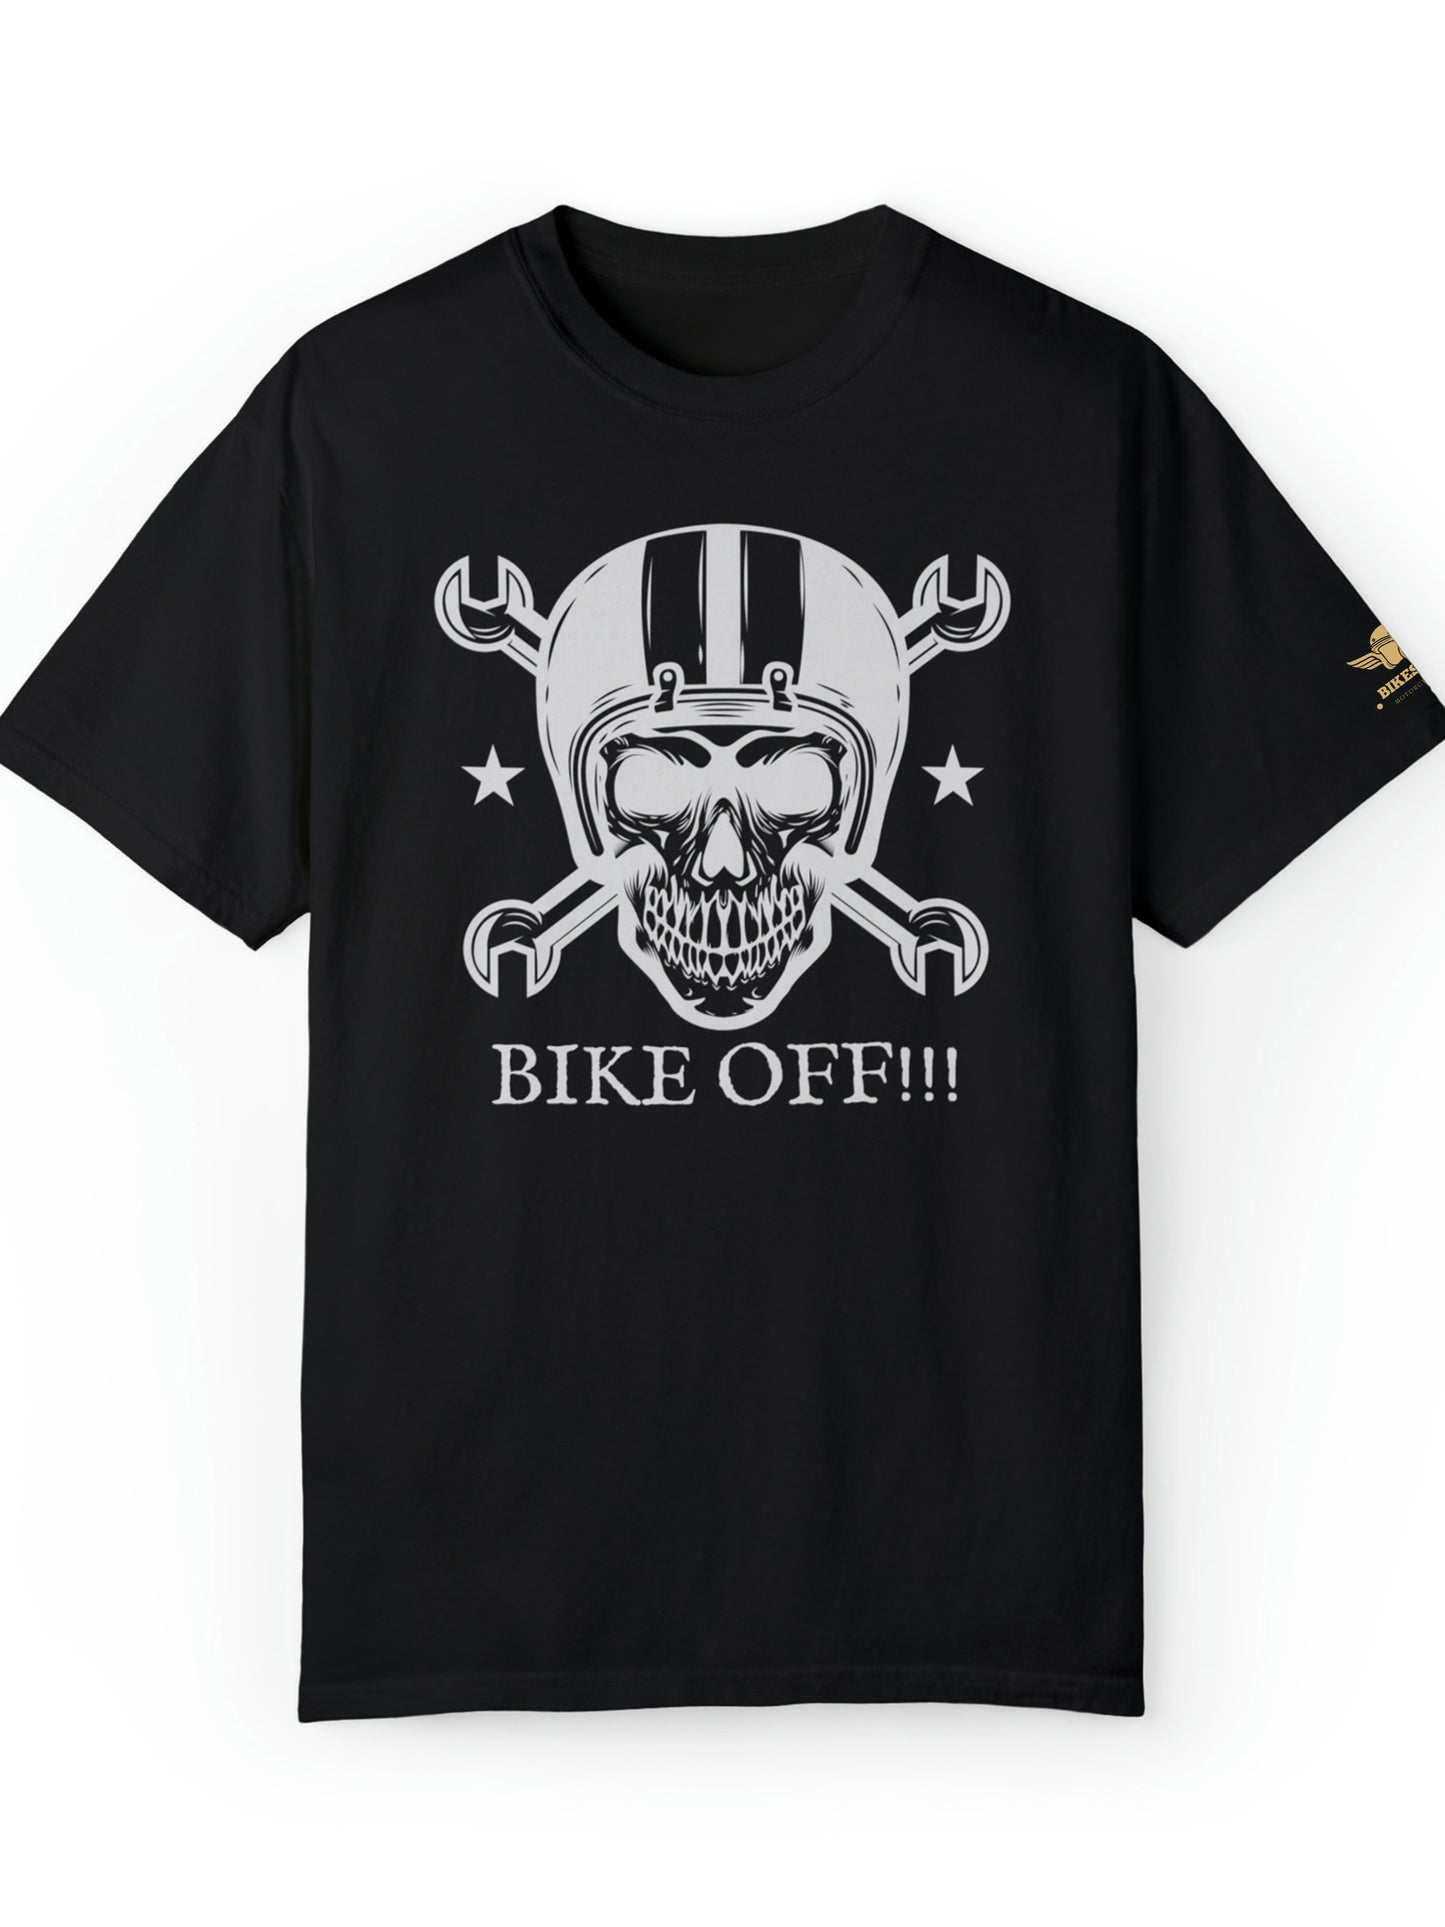 T-shirt motor korte mouw zwart - Bike off!!!